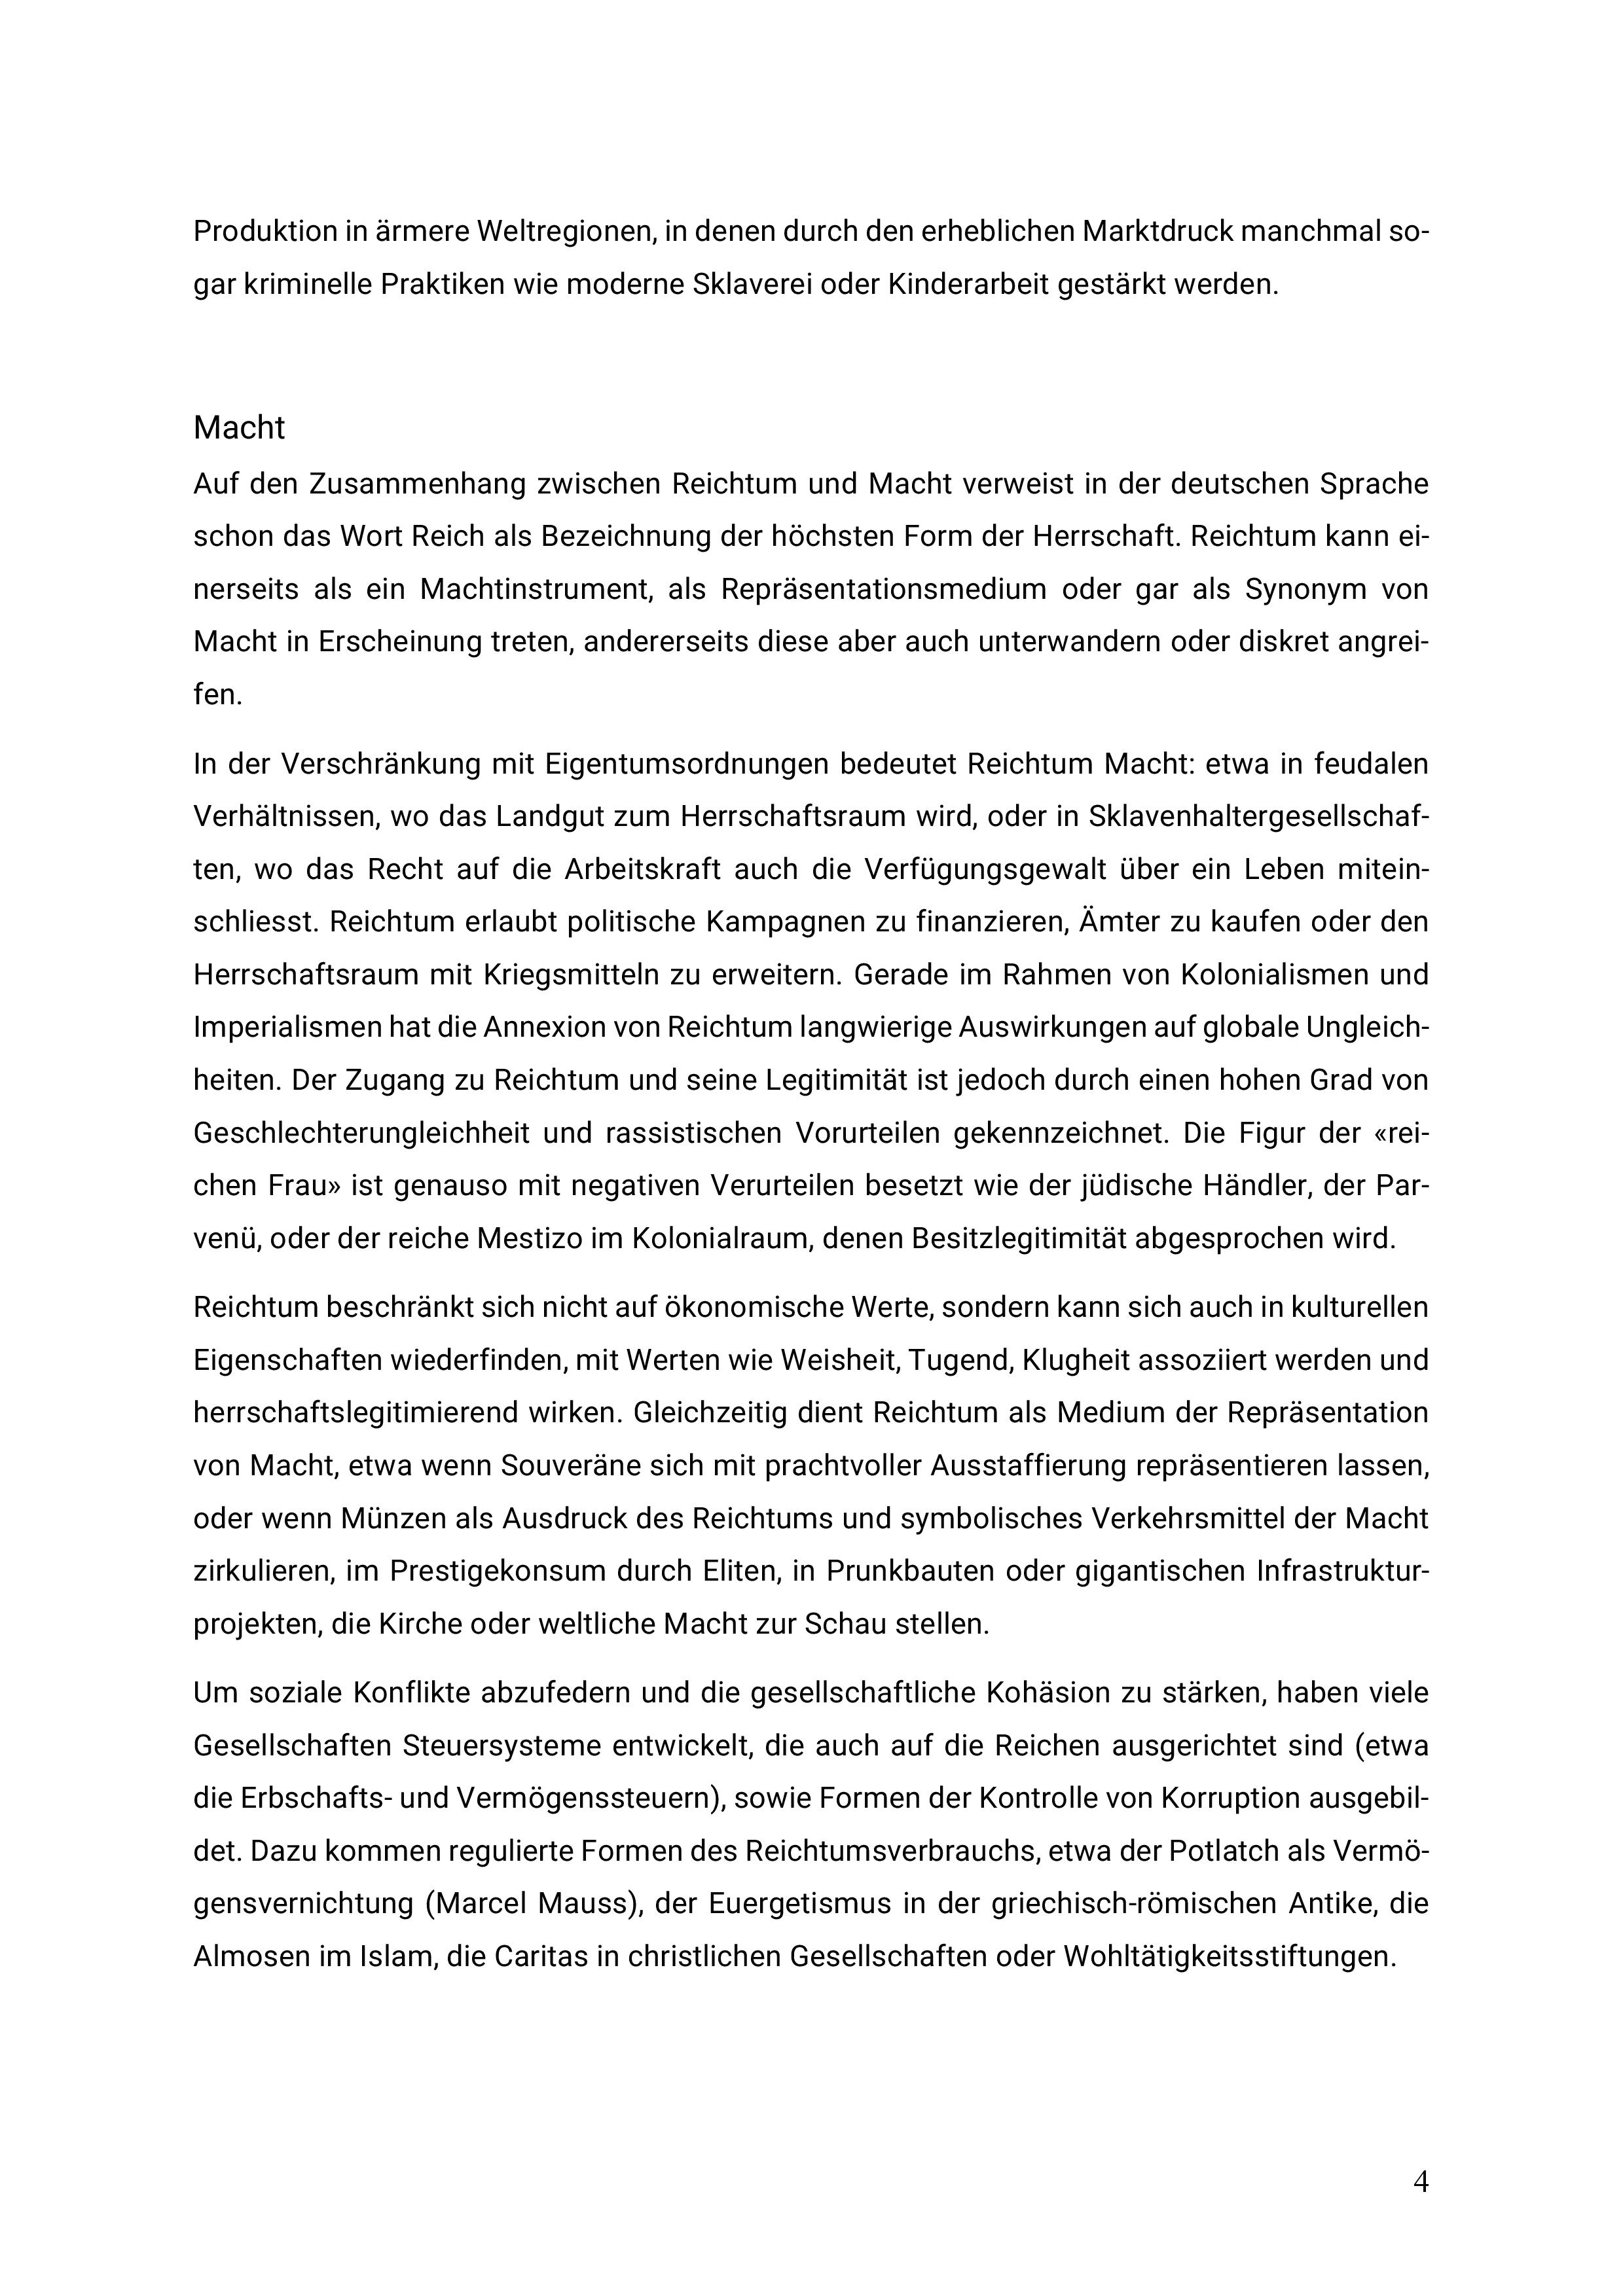 CfP_D Schweizer Geschichtstage 2019-page-004